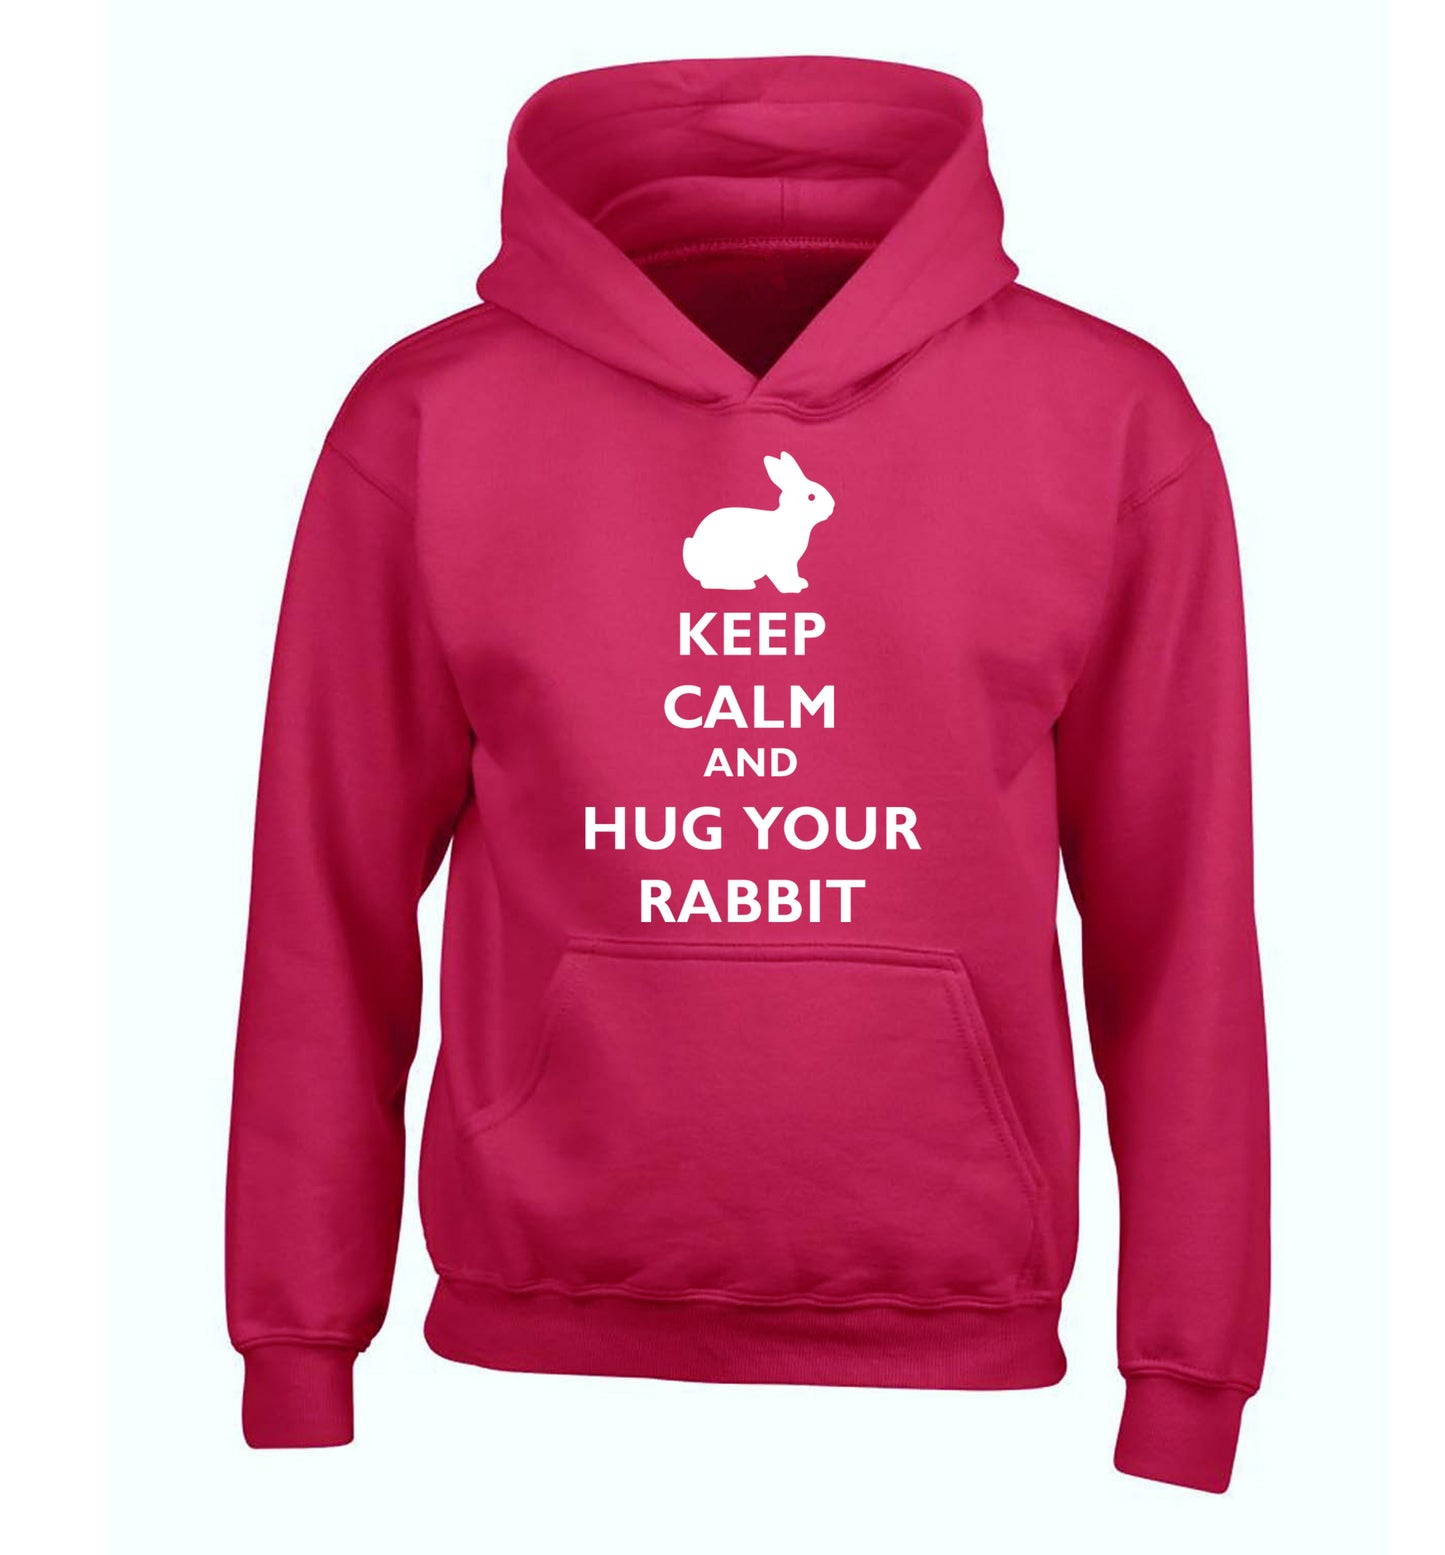 Keep calm and hug your rabbit children's pink hoodie 12-13 Years